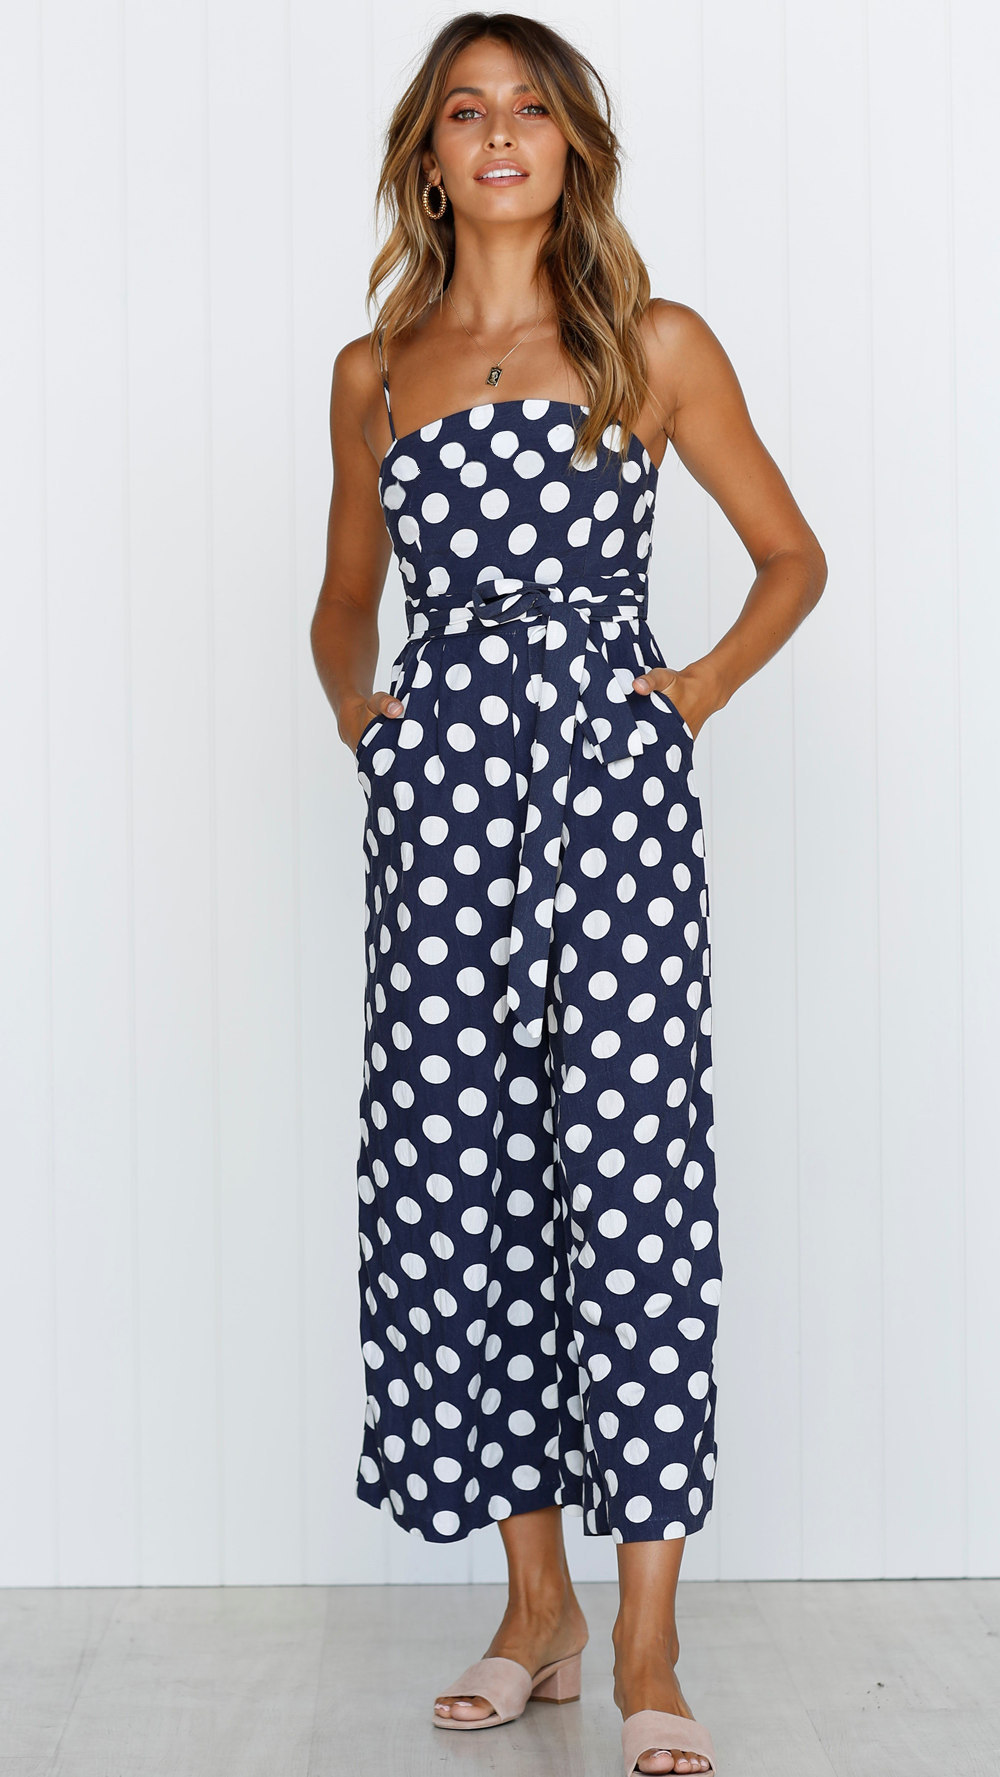 Women Polka Dot Jumpsuit Spaghetti Strap Summer Casual Beach Long Playsuit Wide Leg Romper Overalls navy blue